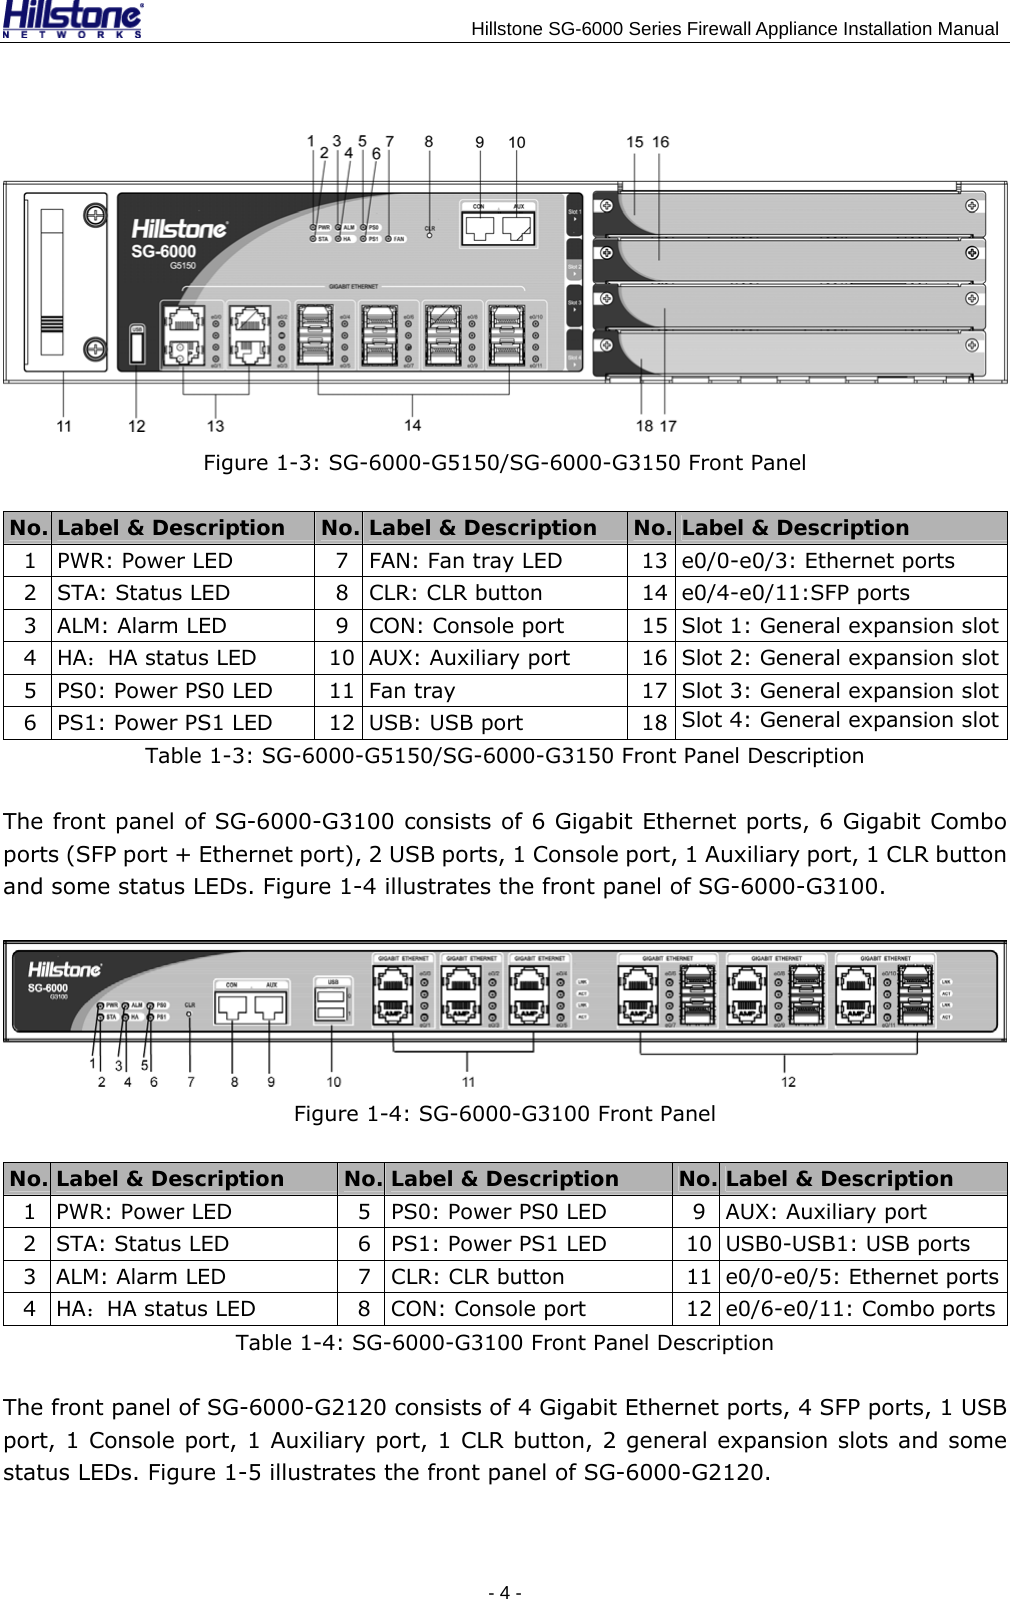                                    Hillstone SG-6000 Series Firewall Appliance Installation Manual  Figure 1-3: SG-6000-G5150/SG-6000-G3150 Front Panel No. Label &amp; Description  No. Label &amp; Description  No. Label &amp; Description 1  PWR: Power LED  7  FAN: Fan tray LED 13 e0/0-e0/3: Ethernet ports 2  STA: Status LED  8  CLR: CLR button  14 e0/4-e0/11:SFP ports 3  ALM: Alarm LED  9  CON: Console port  15 Slot 1: General expansion slot 4  HA：HA status LED  10  AUX: Auxiliary port  16 Slot 2: General expansion slot 5  PS0: Power PS0 LED  11  Fan tray  17 Slot 3: General expansion slot 6  PS1: Power PS1 LED 12  USB: USB port  18 Slot 4: General expansion slot Table 1-3: SG-6000-G5150/SG-6000-G3150 Front Panel Description The front panel of SG-6000-G3100 consists of 6 Gigabit Ethernet ports, 6 Gigabit Combo ports (SFP port + Ethernet port), 2 USB ports, 1 Console port, 1 Auxiliary port, 1 CLR button and some status LEDs. Figure 1-4 illustrates the front panel of SG-6000-G3100.  Figure 1-4: SG-6000-G3100 Front Panel No. Label &amp; Description  No. Label &amp; Description  No. Label &amp; Description 1  PWR: Power LED  5  PS0: Power PS0 LED  9 AUX: Auxiliary port 2  STA: Status LED  6  PS1: Power PS1 LED 10 USB0-USB1: USB ports 3  ALM: Alarm LED  7  CLR: CLR button  11 e0/0-e0/5: Ethernet ports 4  HA：HA status LED  8  CON: Console port  12 e0/6-e0/11: Combo ports Table 1-4: SG-6000-G3100 Front Panel Description The front panel of SG-6000-G2120 consists of 4 Gigabit Ethernet ports, 4 SFP ports, 1 USB port, 1 Console port, 1 Auxiliary port, 1 CLR button, 2 general expansion slots and some status LEDs. Figure 1-5 illustrates the front panel of SG-6000-G2120. - 4 -  